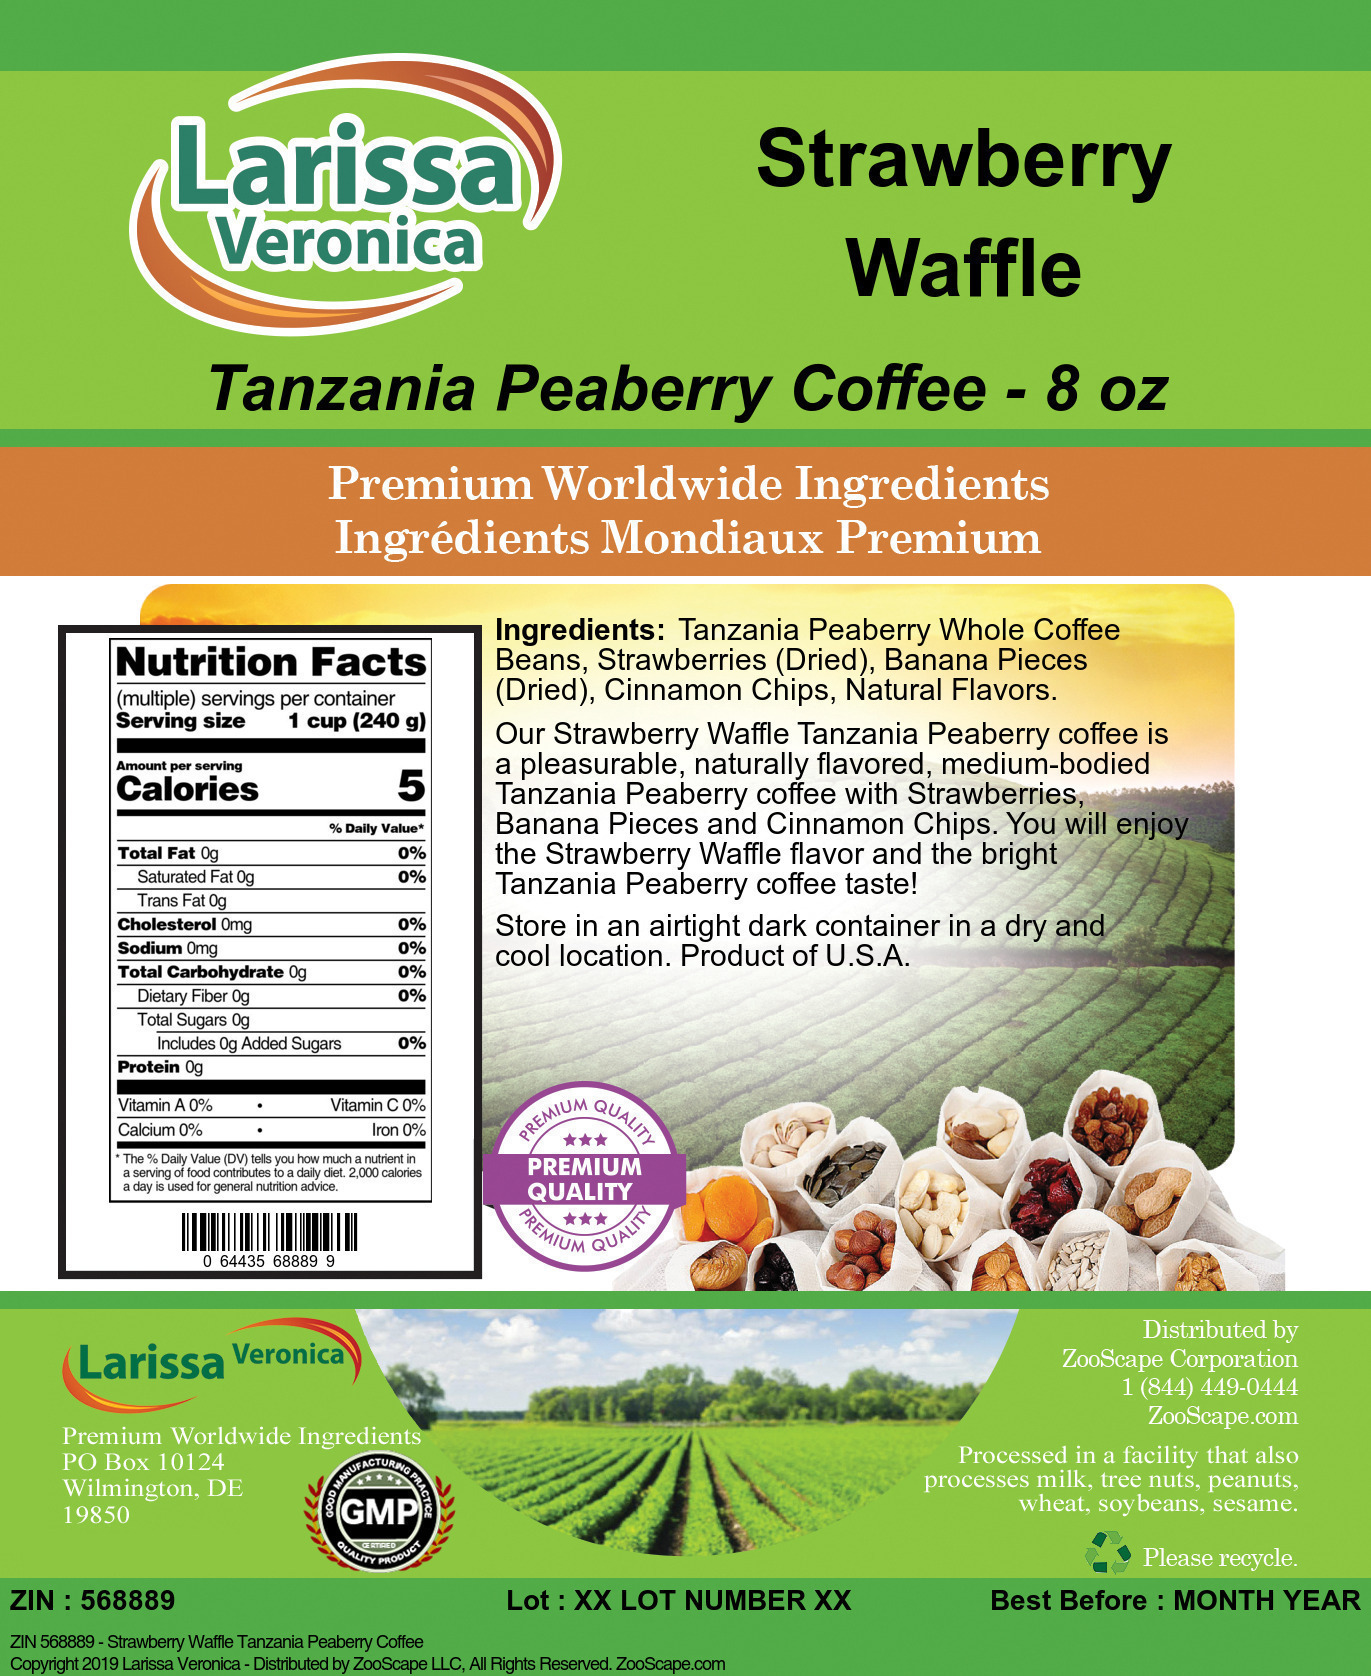 Strawberry Waffle Tanzania Peaberry Coffee - Label